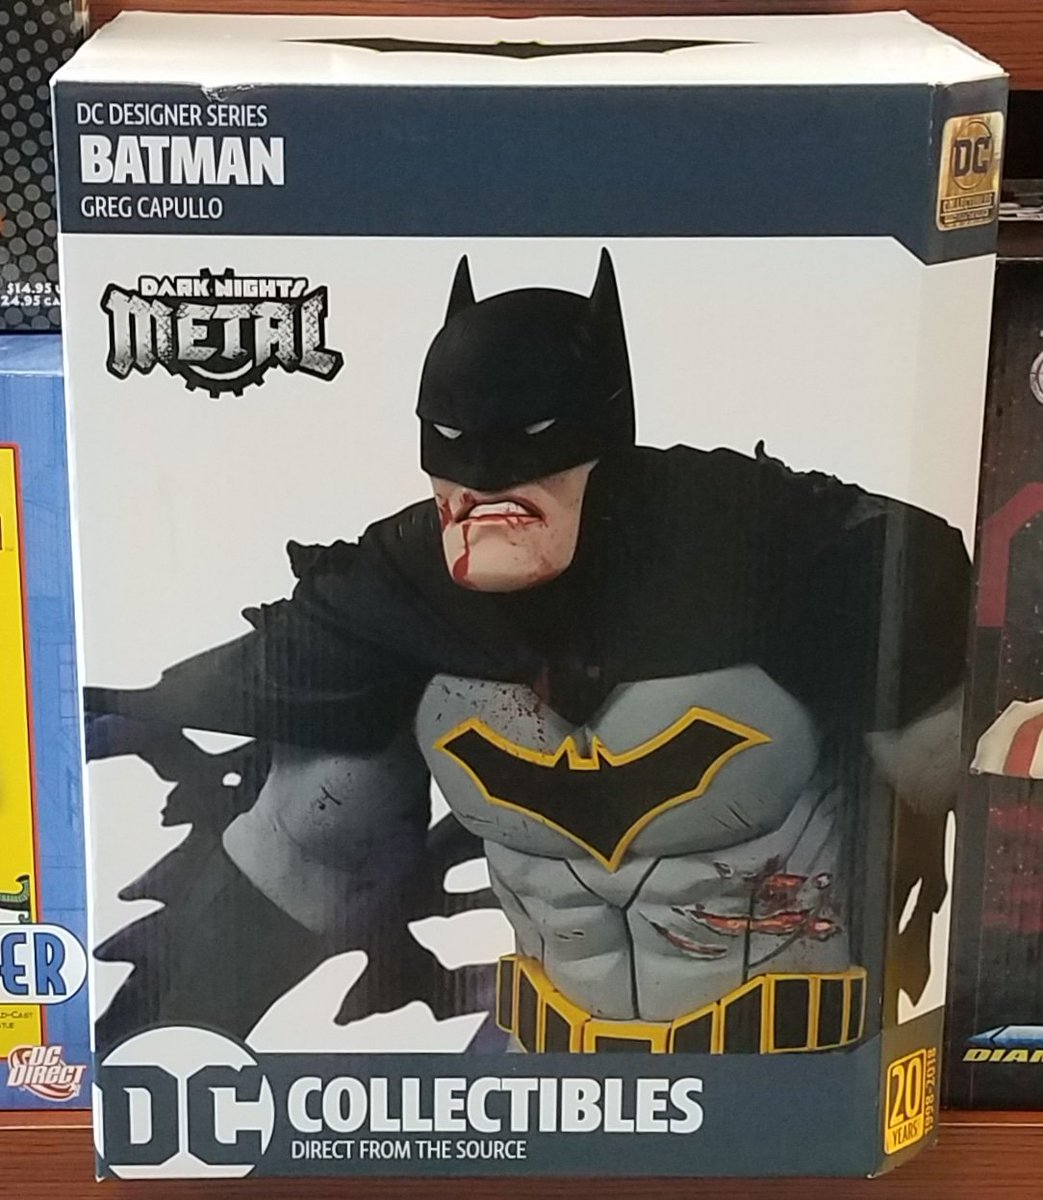 DC Designer Series Dark Nights Metal Batman statue
.
.
.
#dcdesignerseries #batman #gregcapullo #darknightsmetal #darkknight #dccomics #brucewayne #dccollectibles #directfromthesource #metalbatman #collectthemall #collectiblestatue #houston #comicbookstore #toyhunter